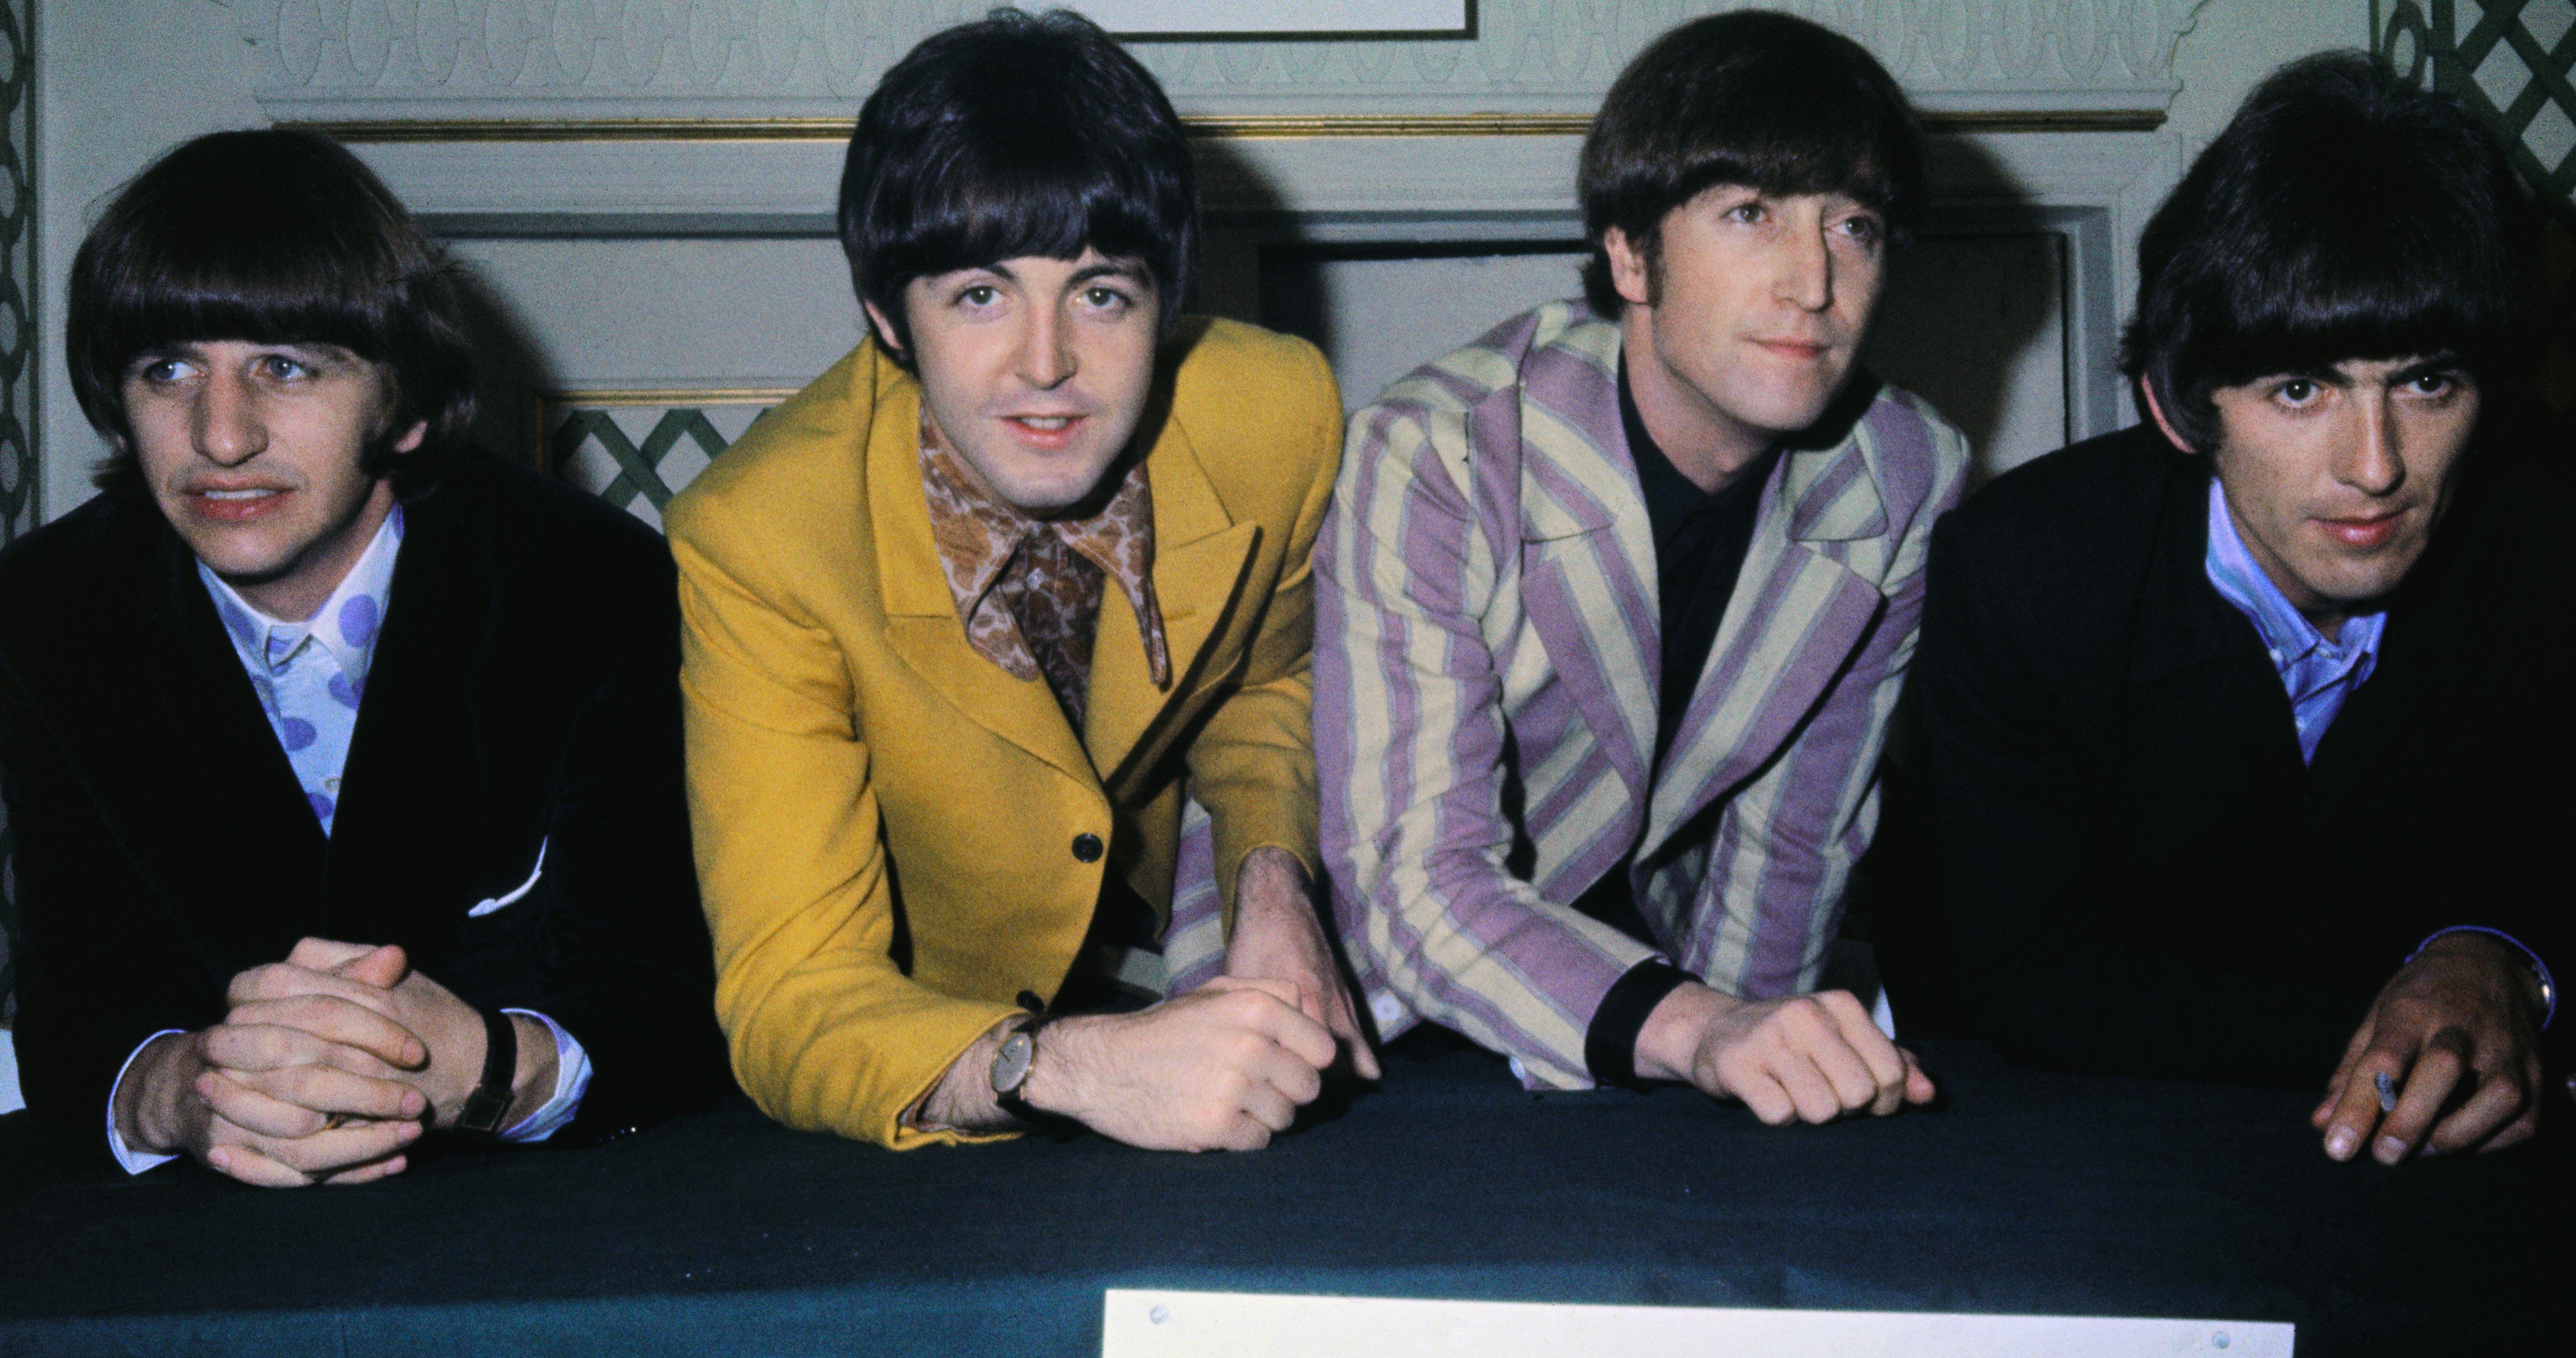 Fans Accused The Offspring of Ripping Off The Beatles’ ‘Ob-La-Di, Ob-La-Da’